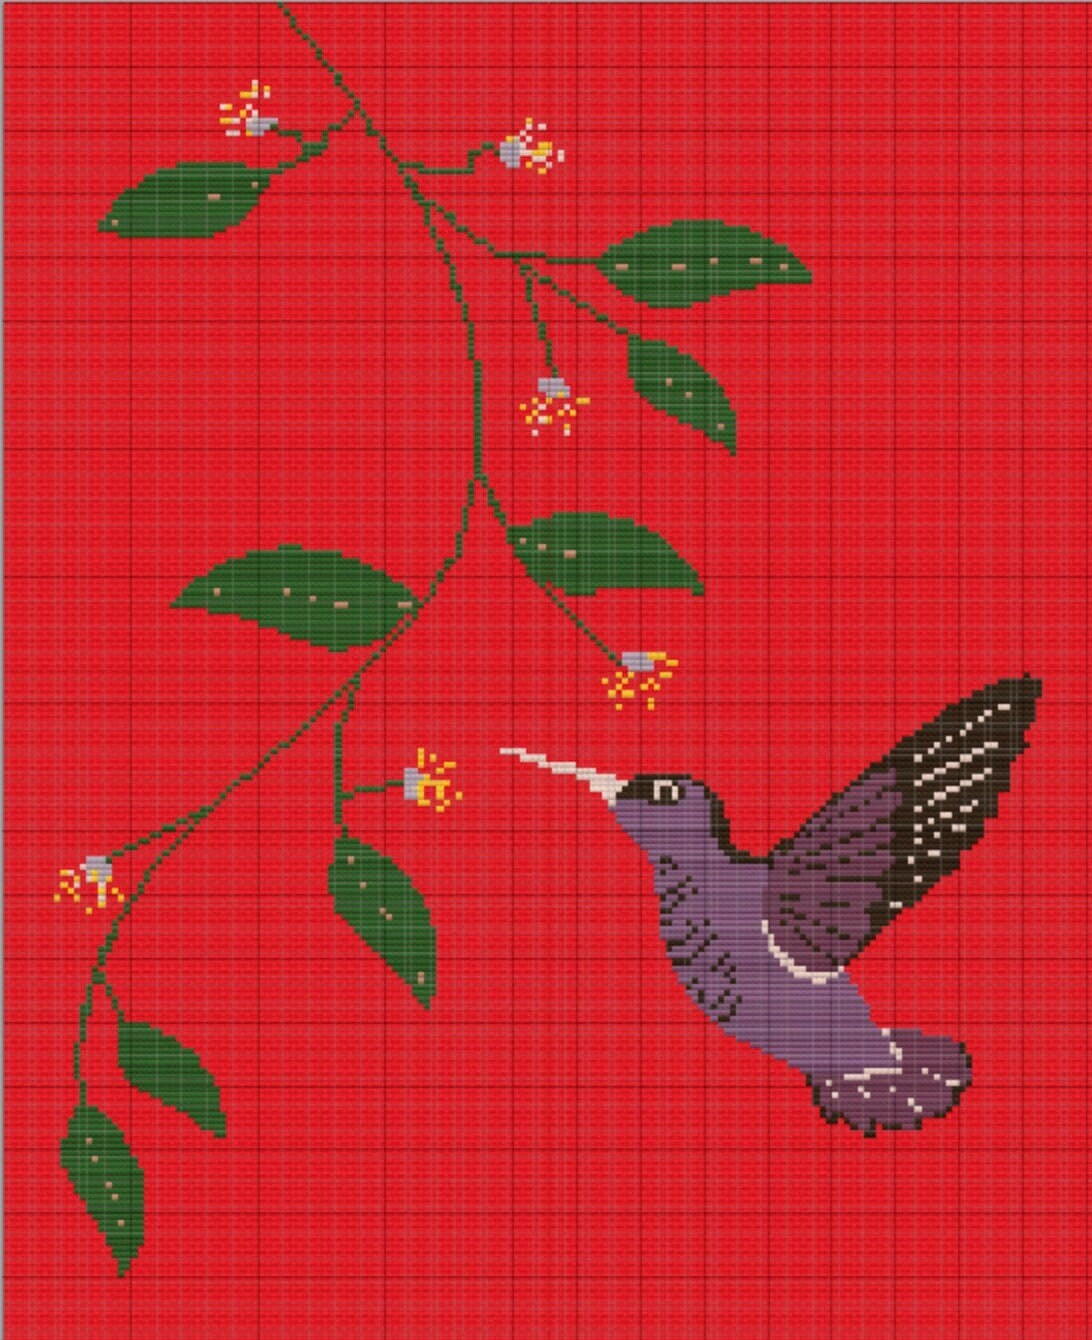 I Love to Stitch Duplicate Stitch Book by Consuella K. Molton - Item #275